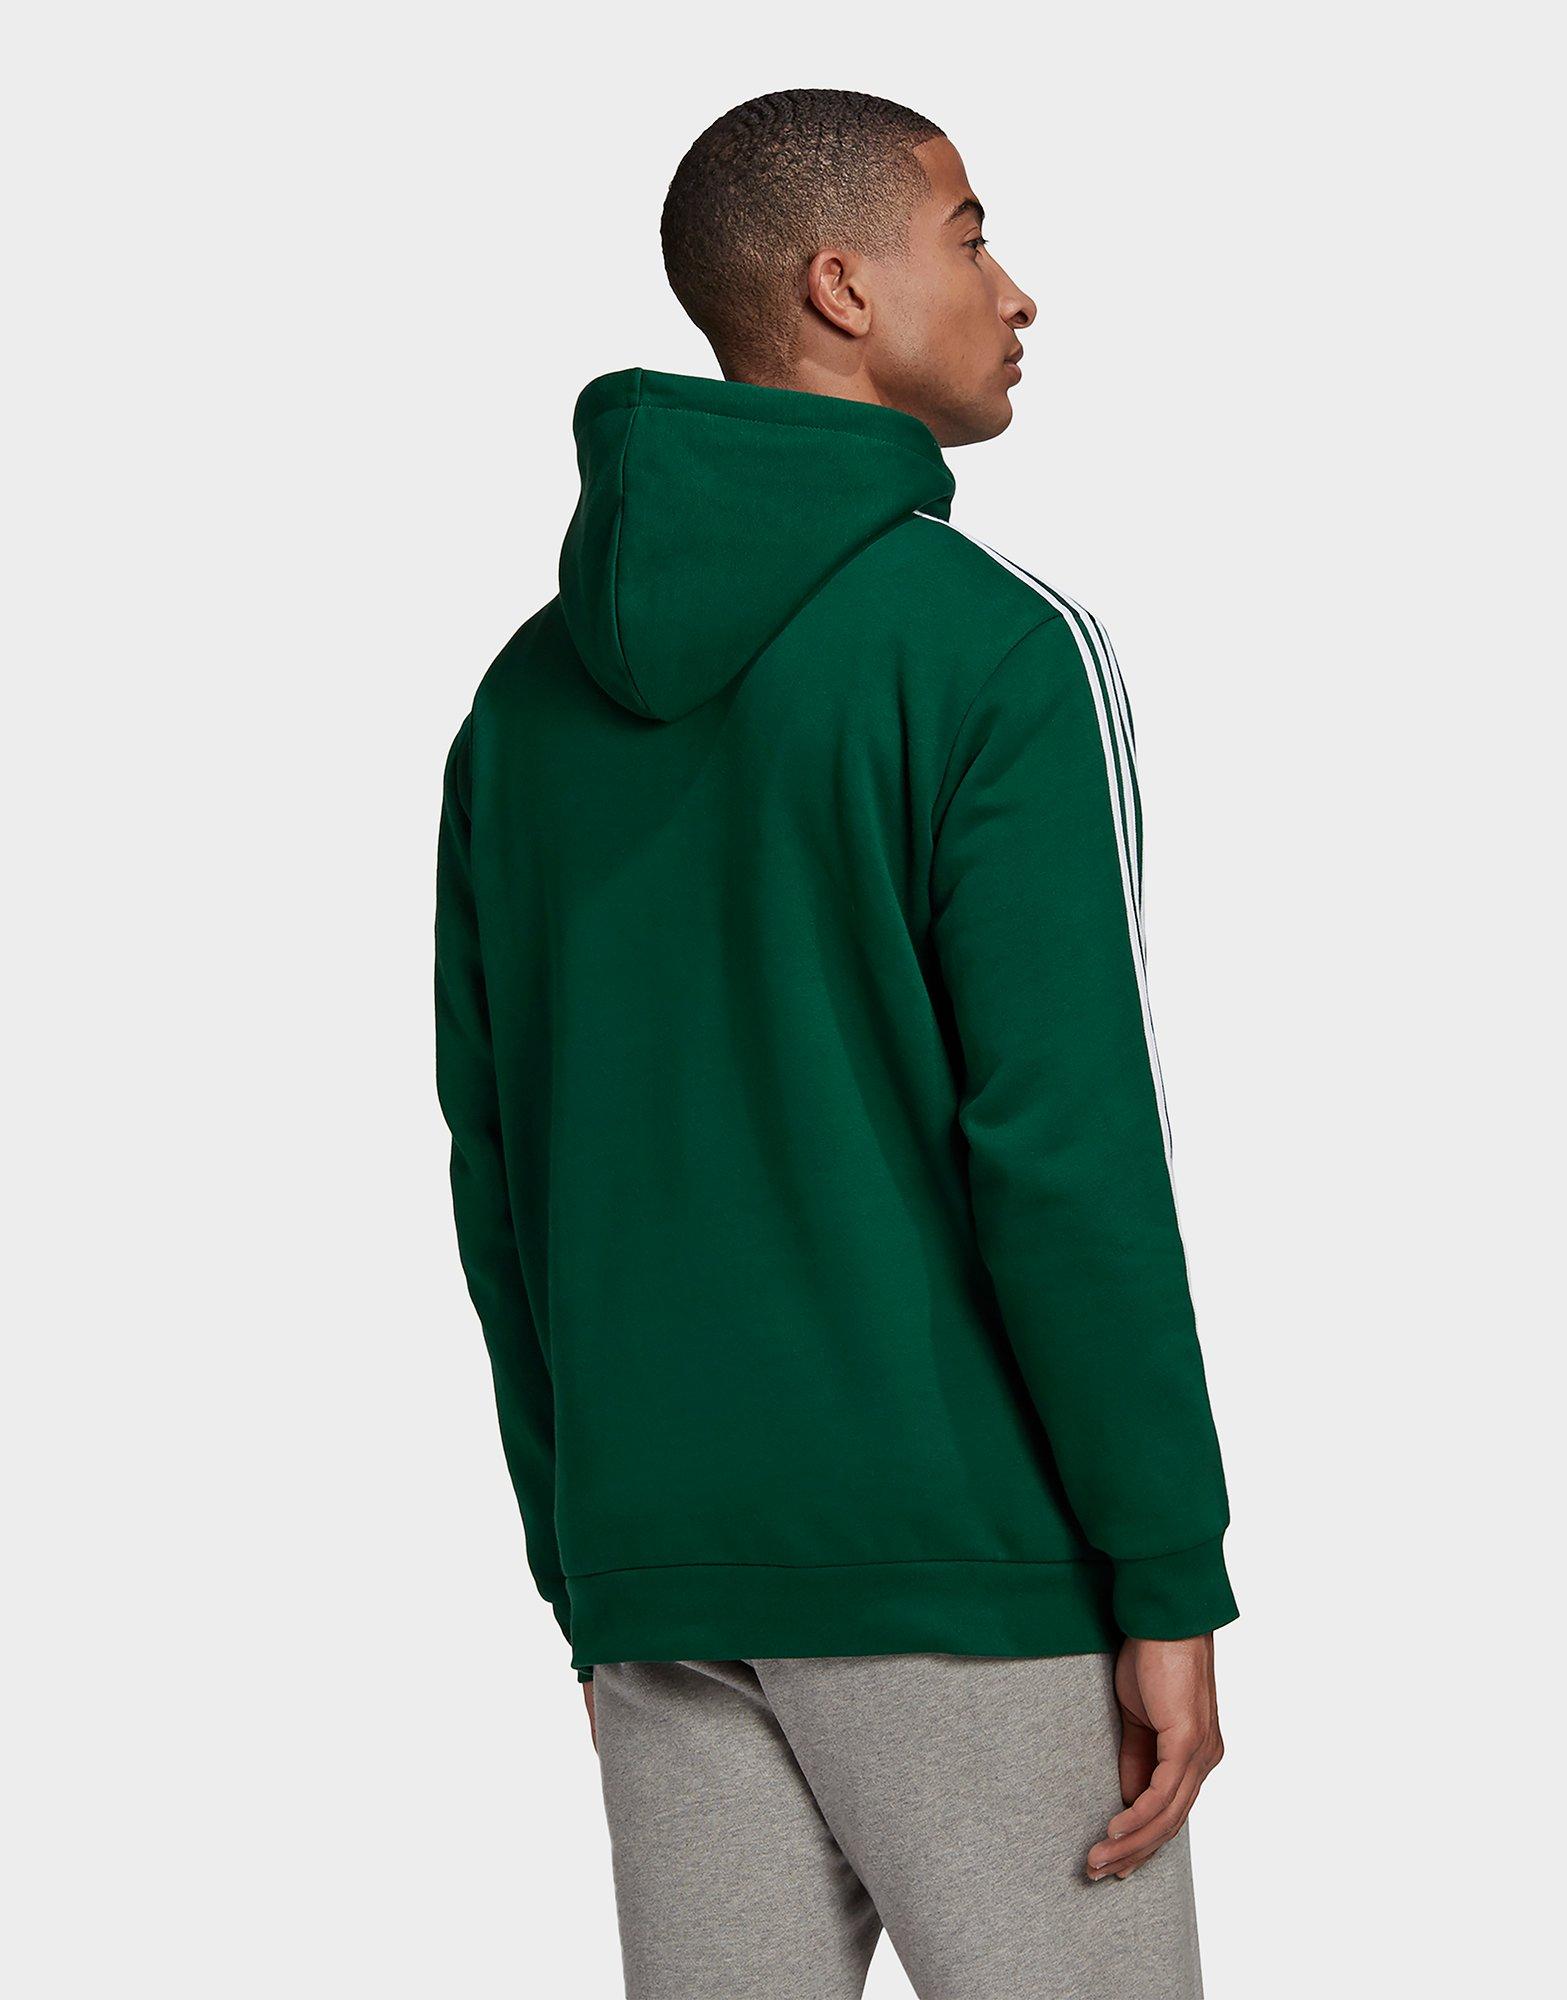 adidas originals hoodie with shoulder 3 stripes green